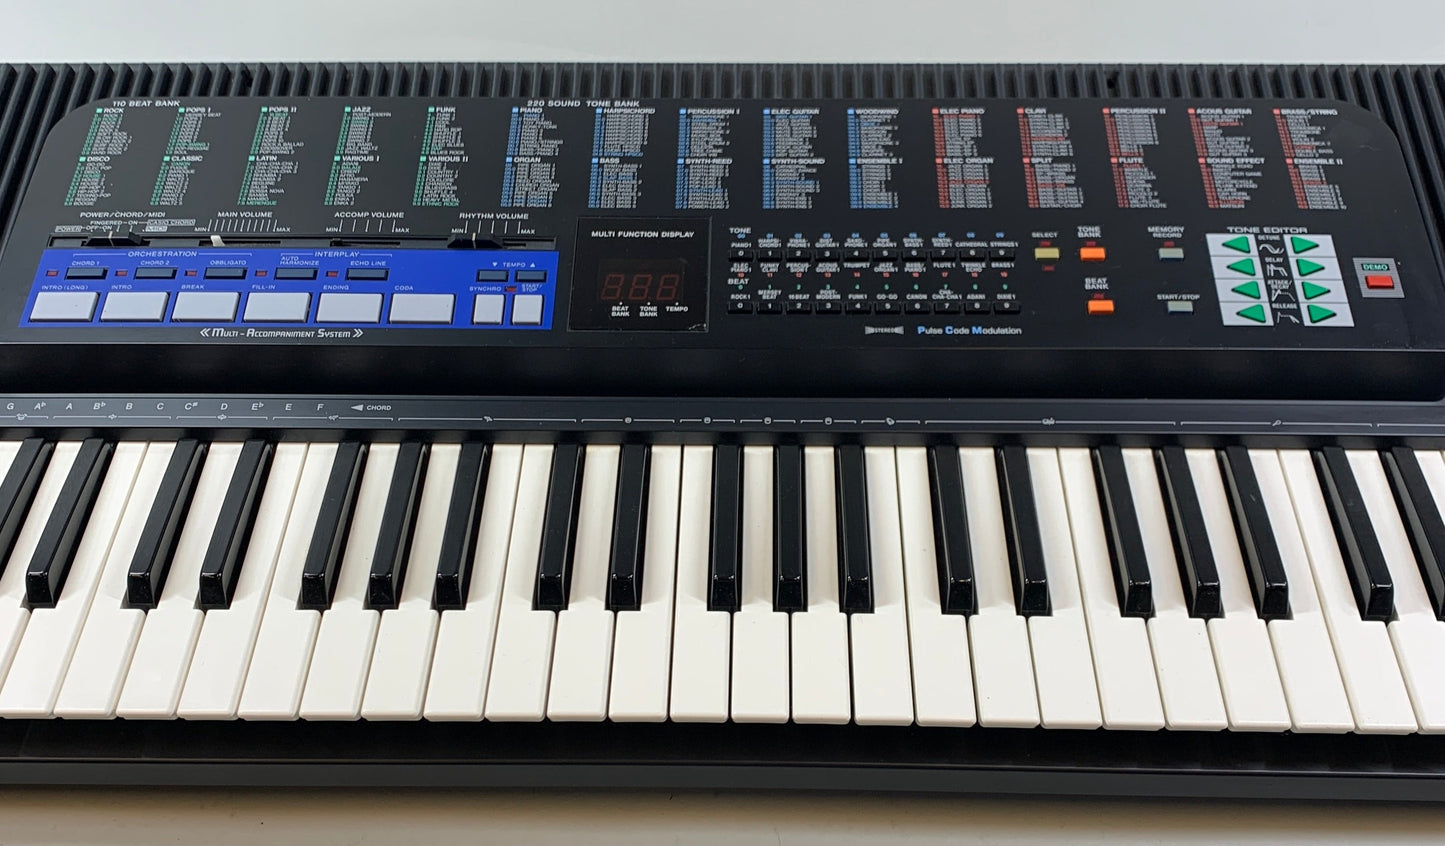 Casio ToneBank Keyboard CT-670 Black